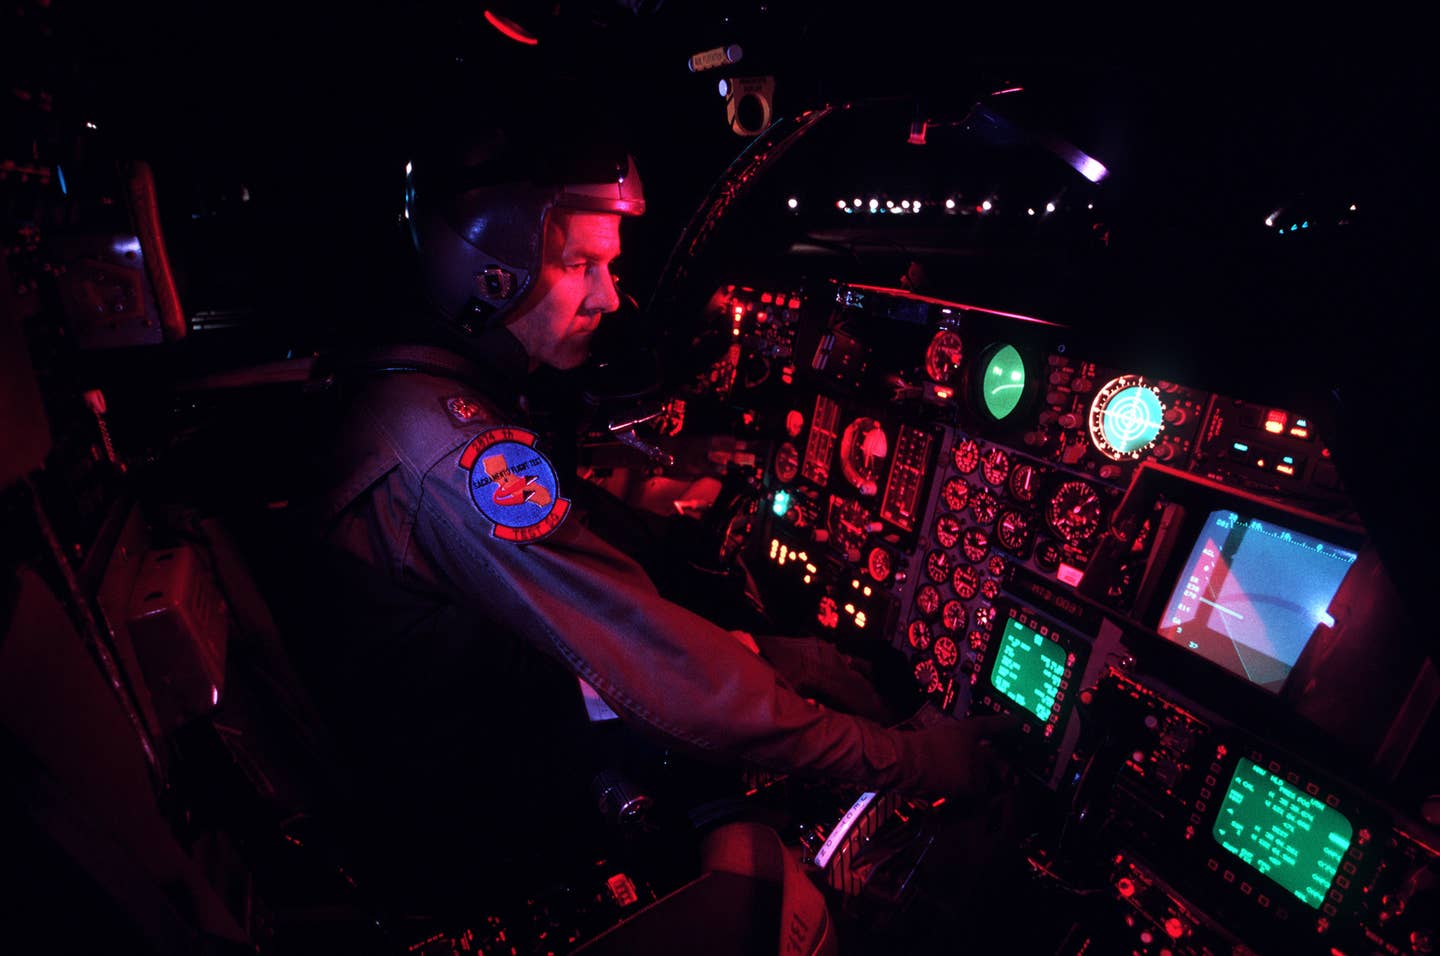 f-111_night_cockpit.jpg